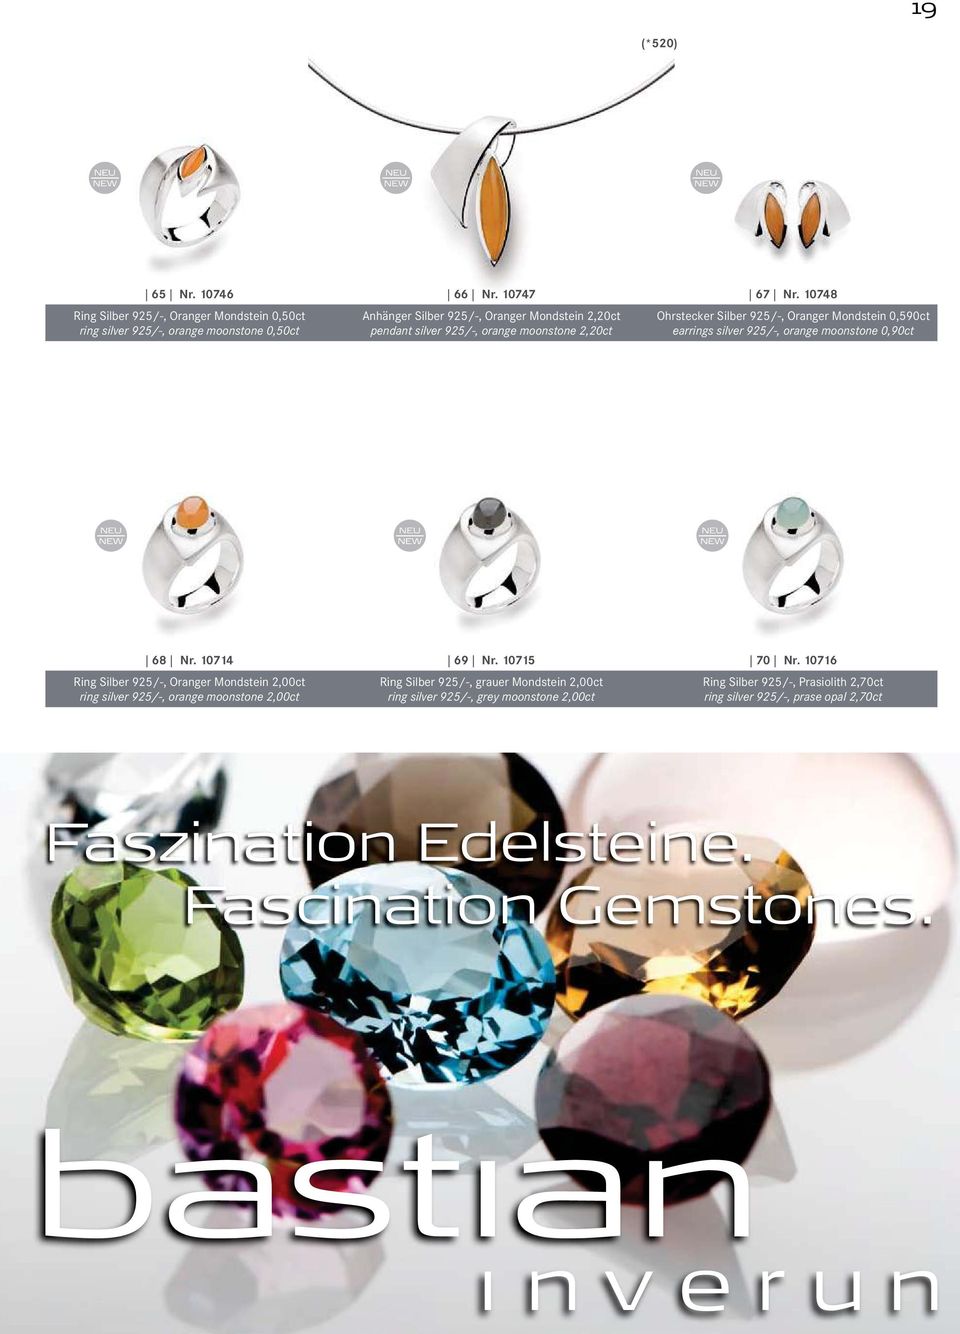 10748 Ohrstecker Silber 925/-, Oranger Mondstein 0,590ct earrings silver 925/-, orange moonstone 0,90ct 68 Nr.